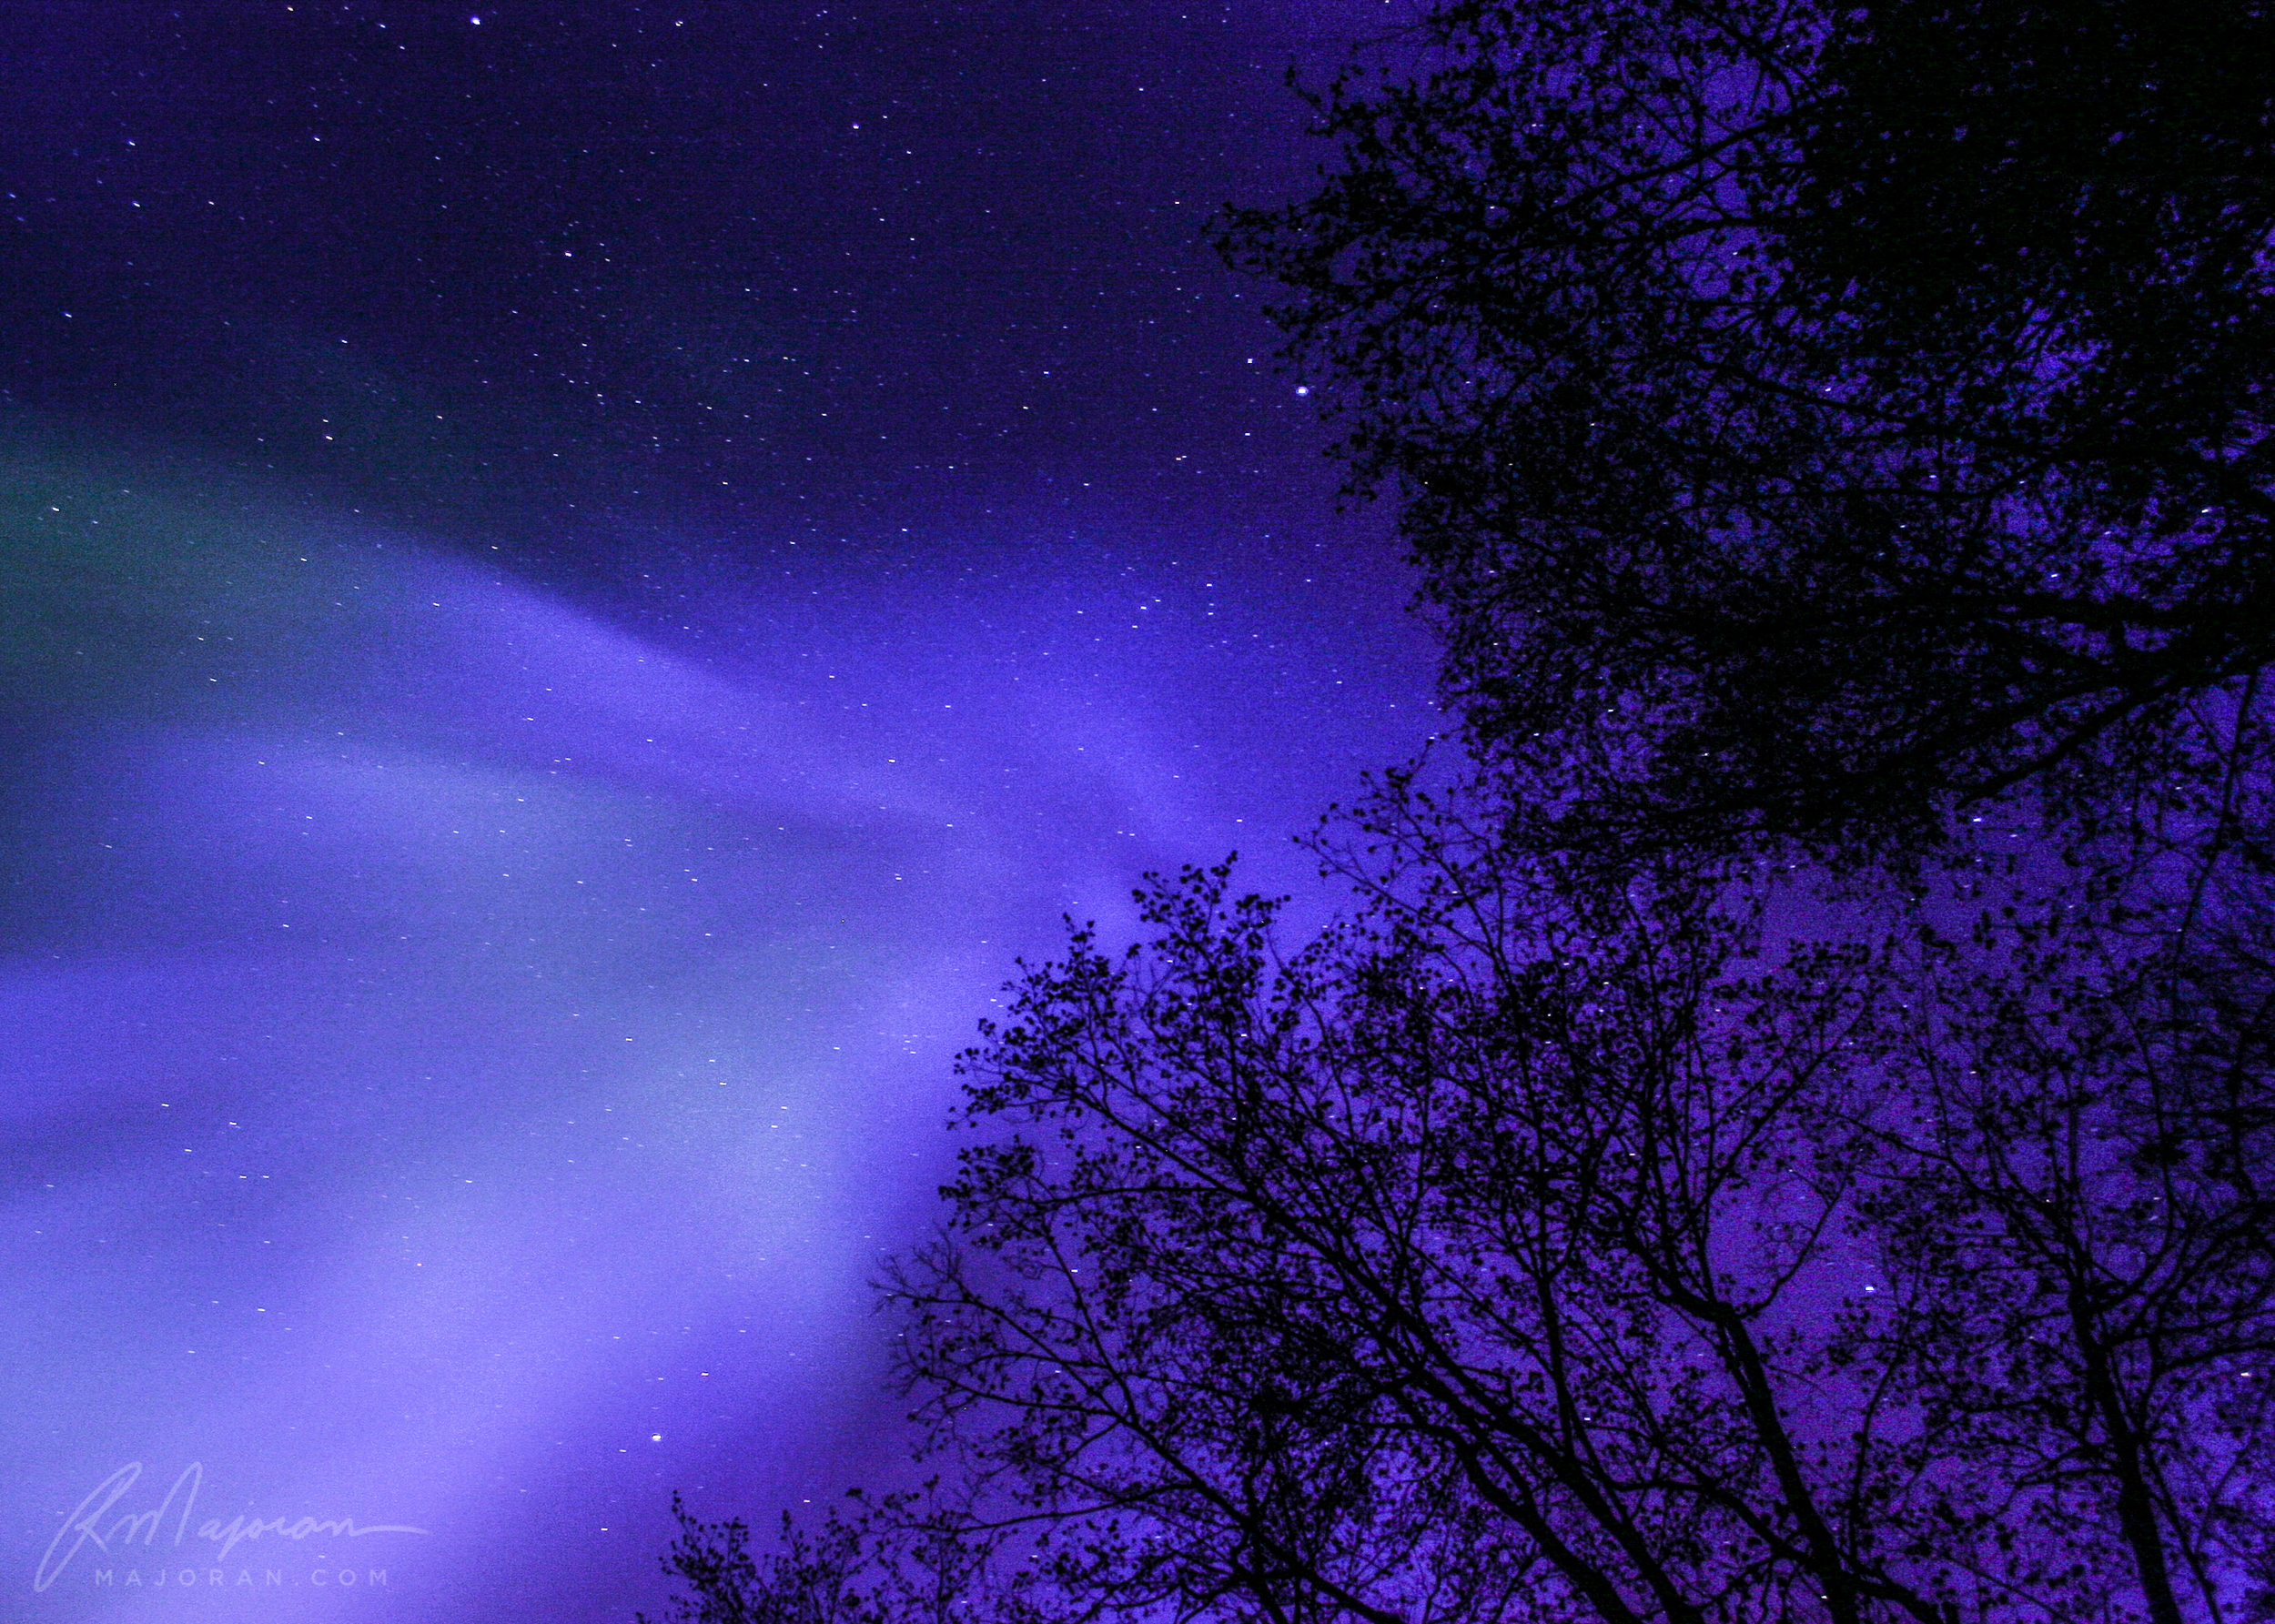 Ray Majoran - Aurora Borealis (Northern Lights) Photo